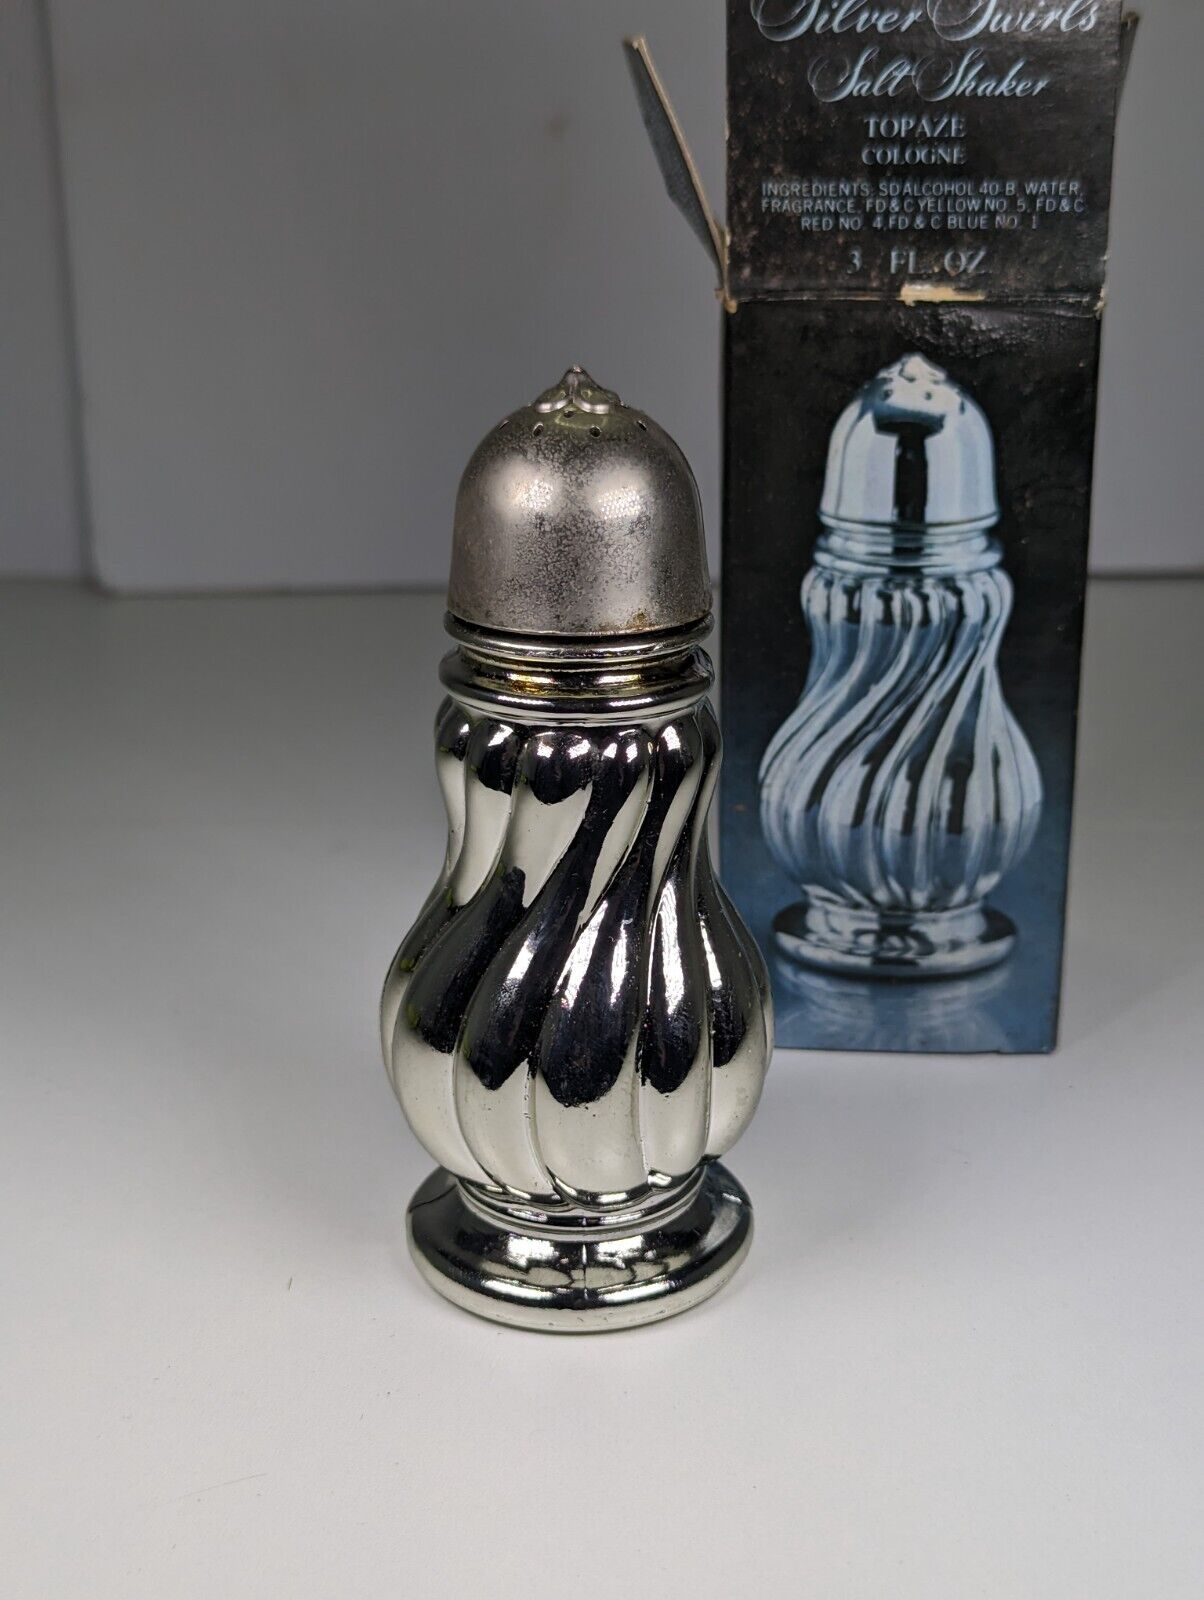 70\'s Vintage Avon Silver Swirls “Topaze” Salt and Pepper Shaker w/ box